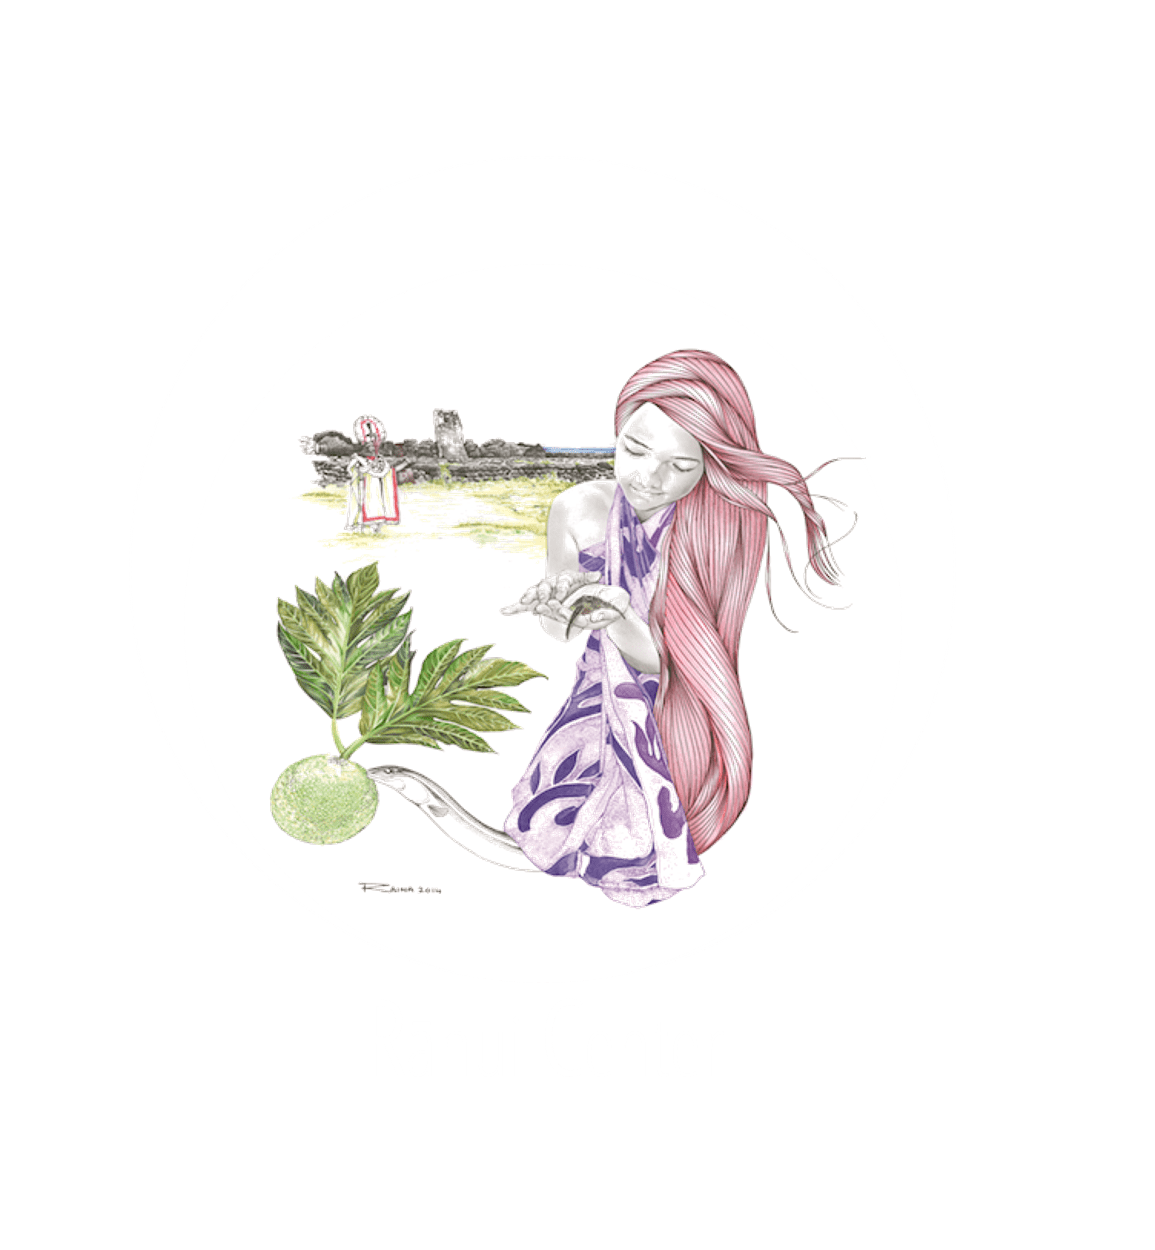 The Rahui Forum and Resource Center